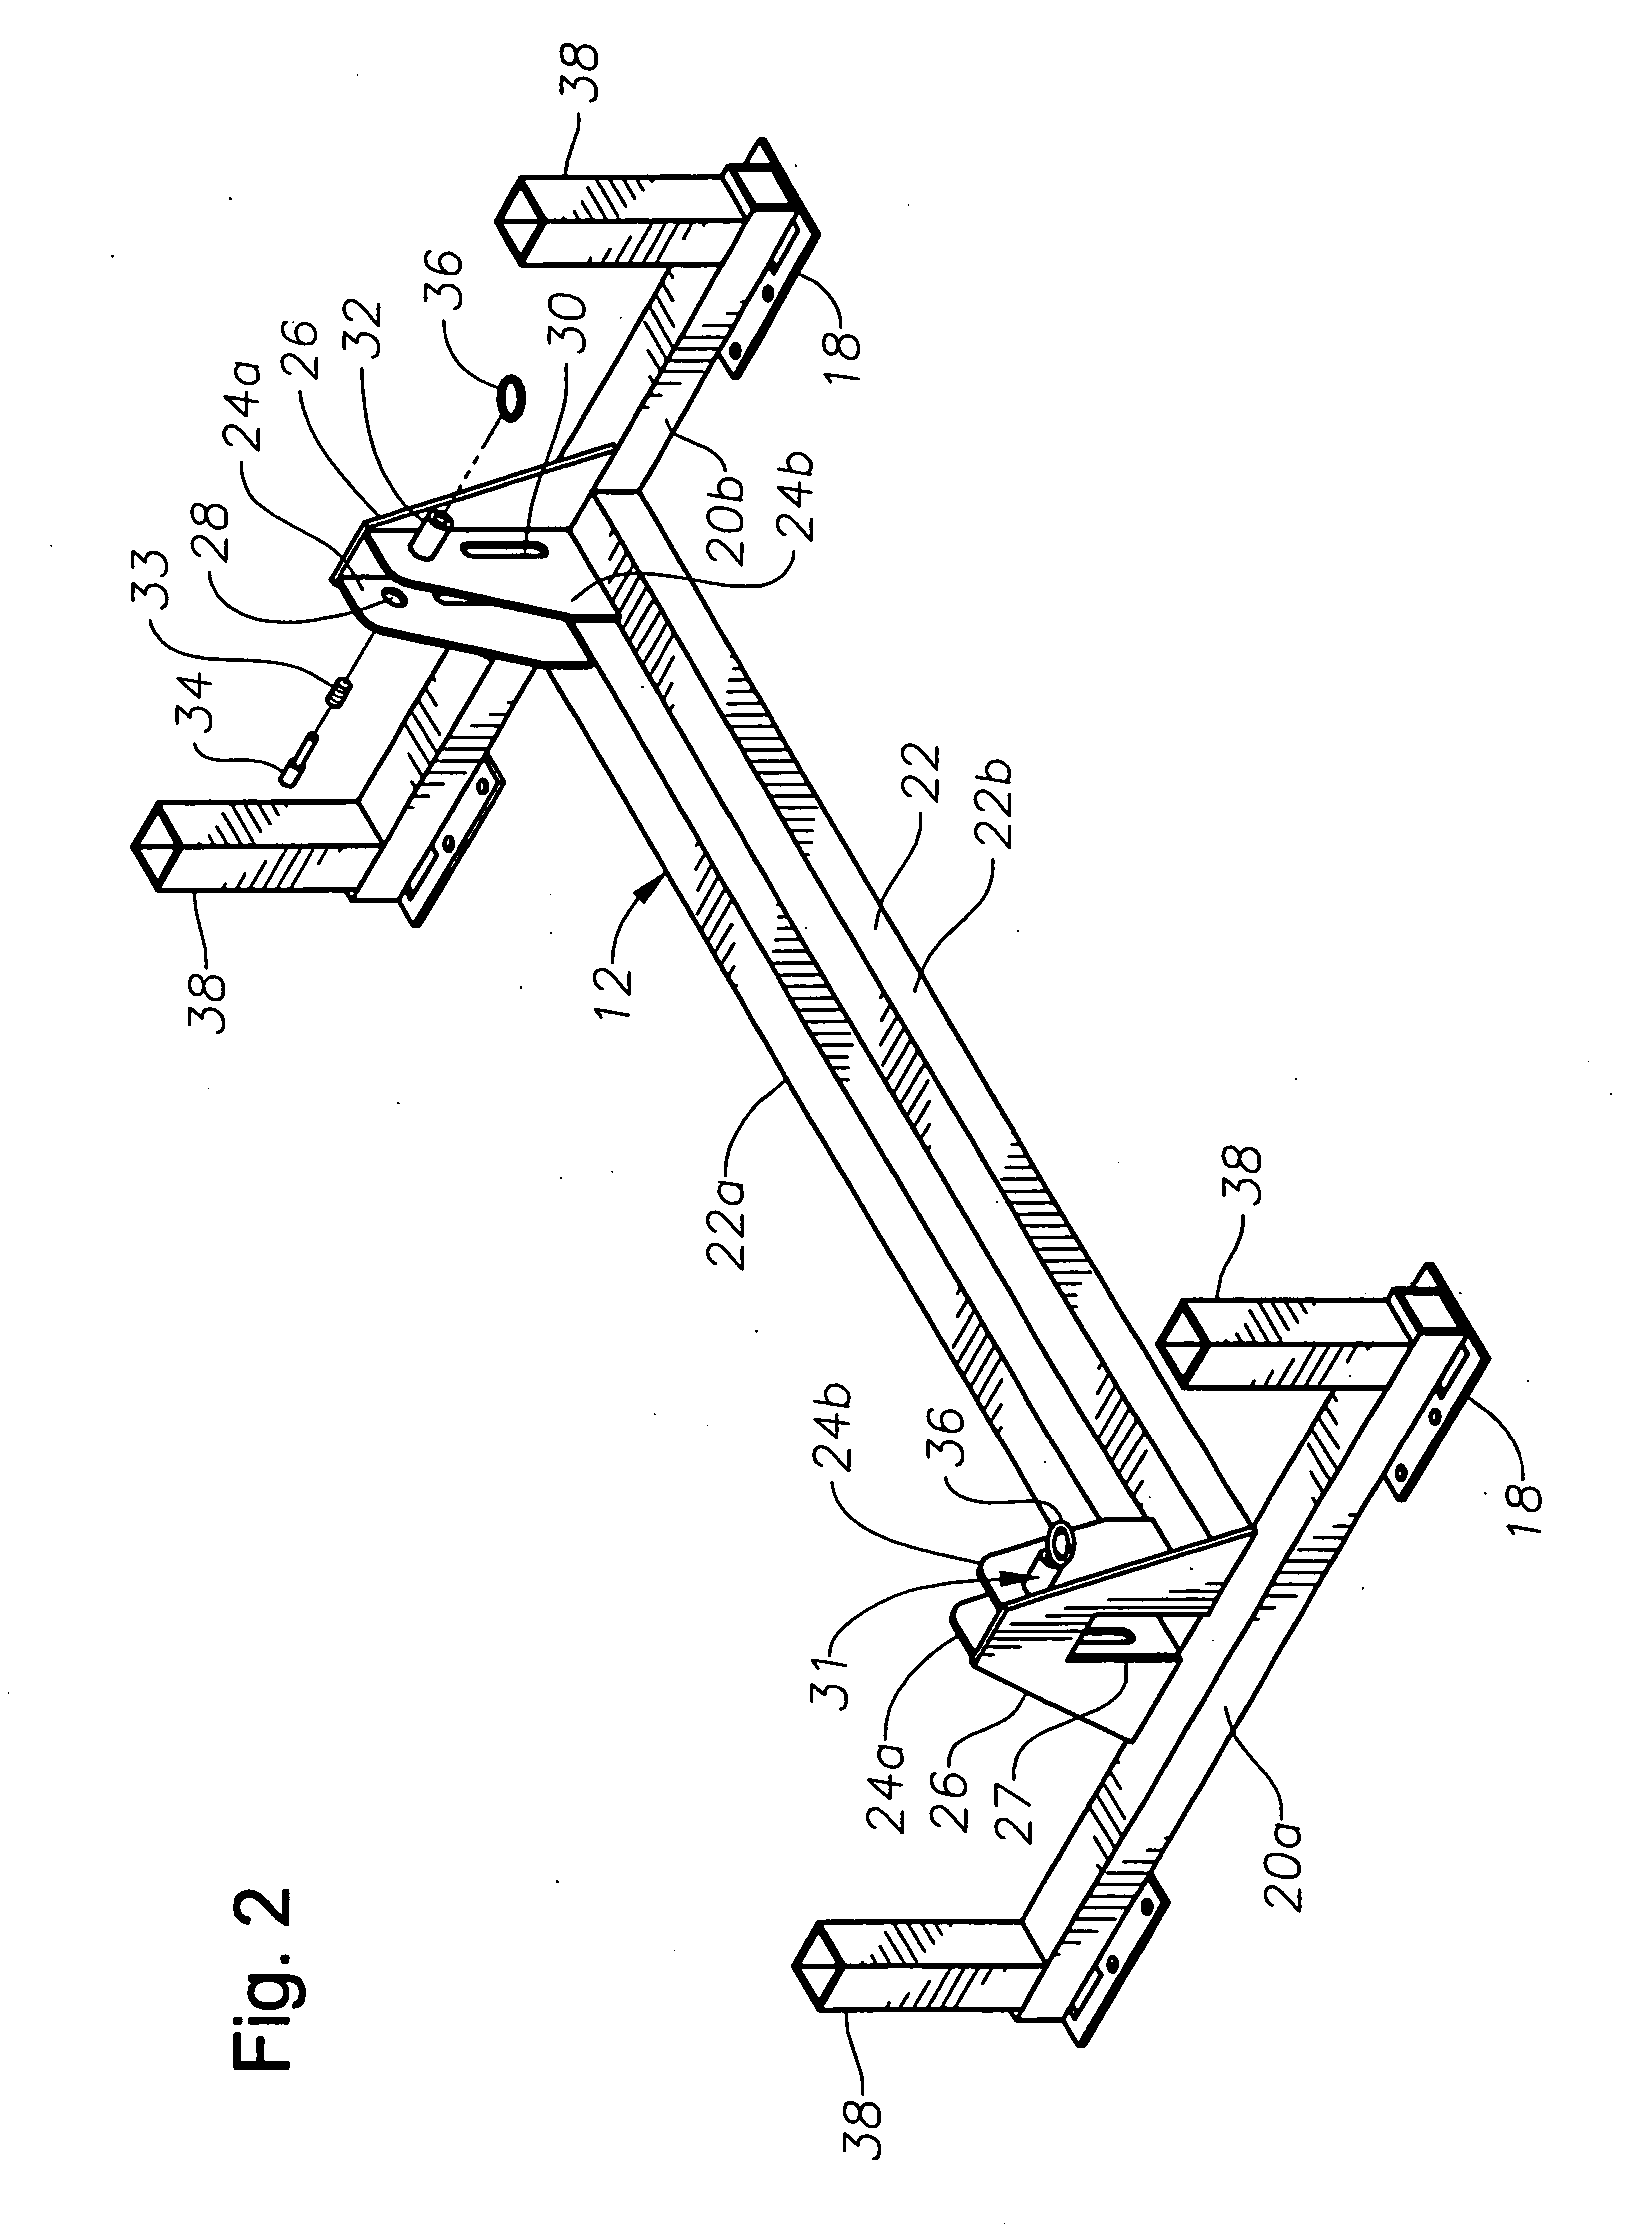 Stackable rolling rack apparatus